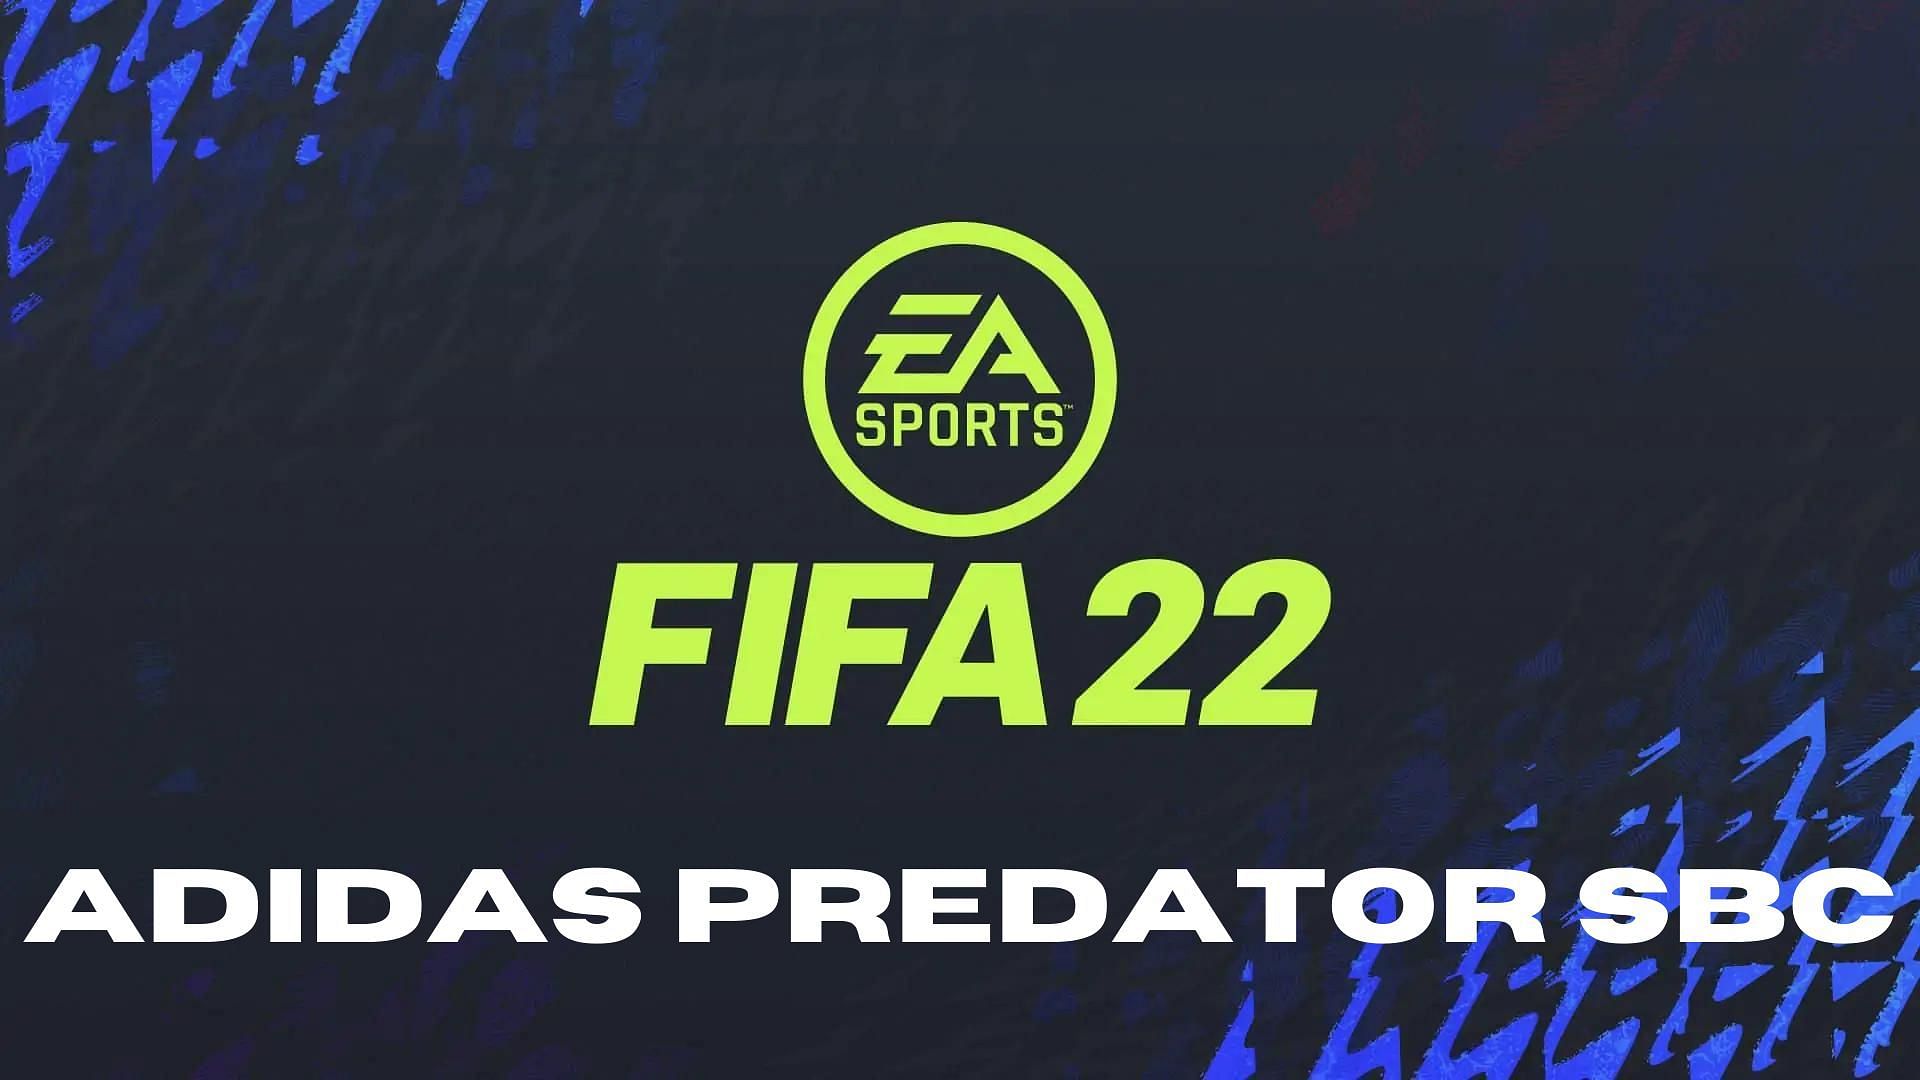 Adidas Predator is the latest single-task SBC in FIFA 22 (Image via Sportskeeda)